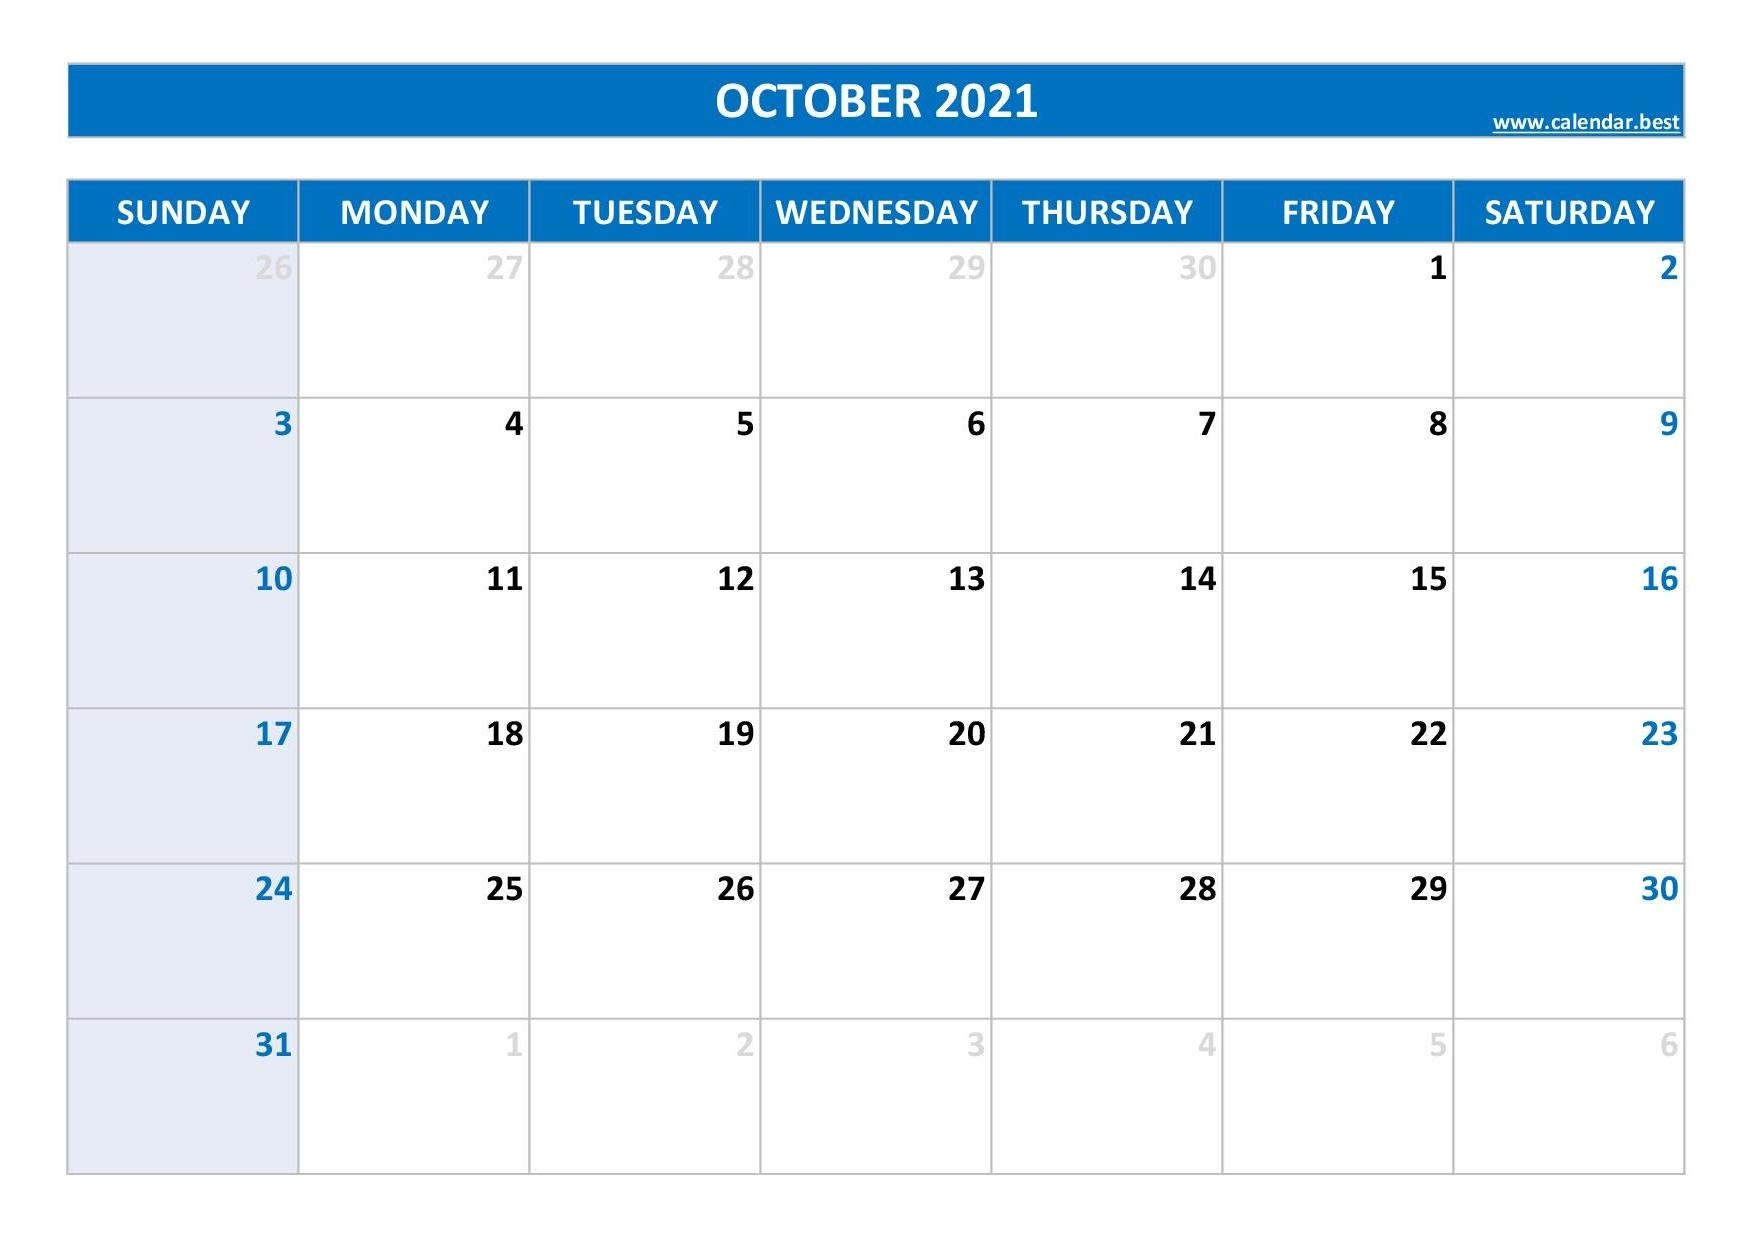 October 2021 Calendar -Calendar.best October 2021 Blank Calendar